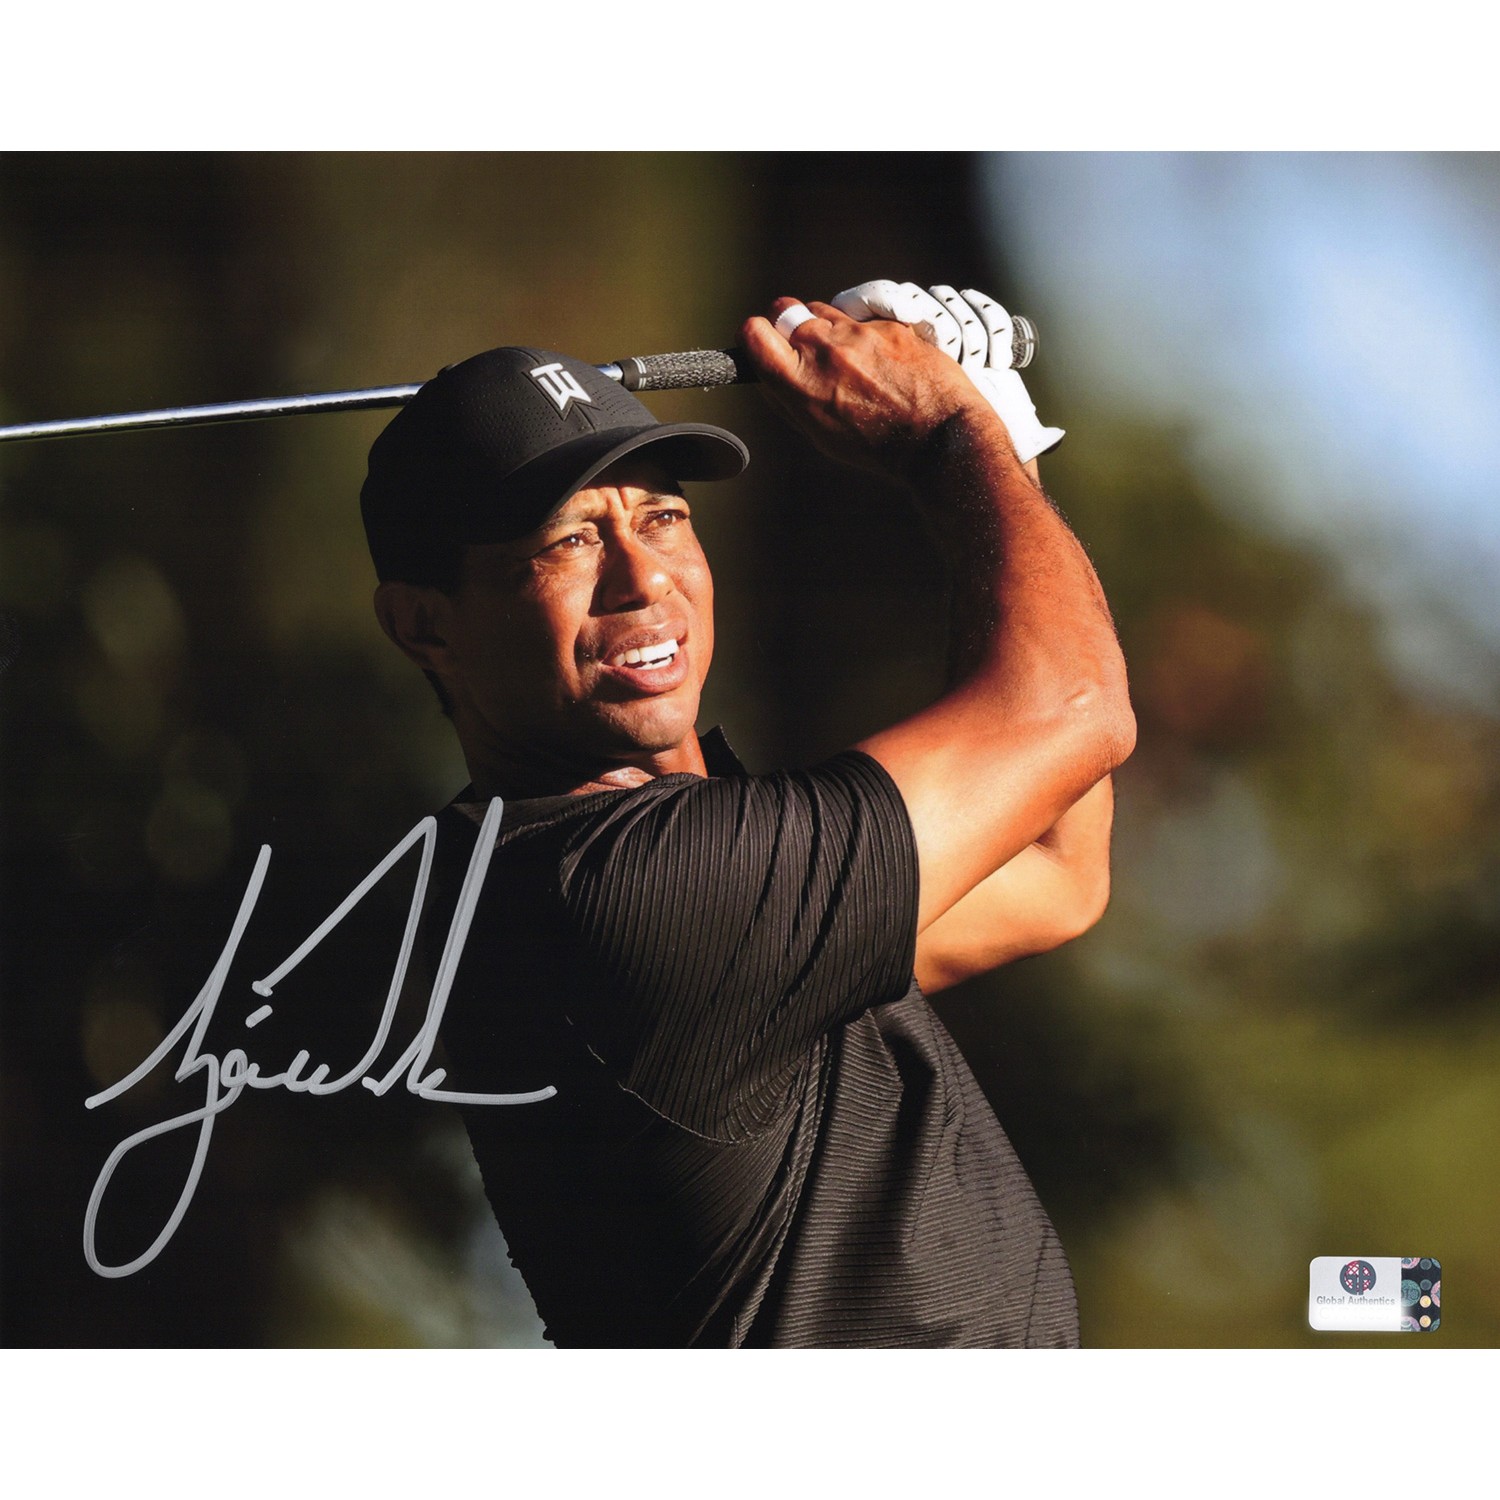 Tiger Woods タイガー・ウッズ 直筆サイン入り写真 Global Authentics認証